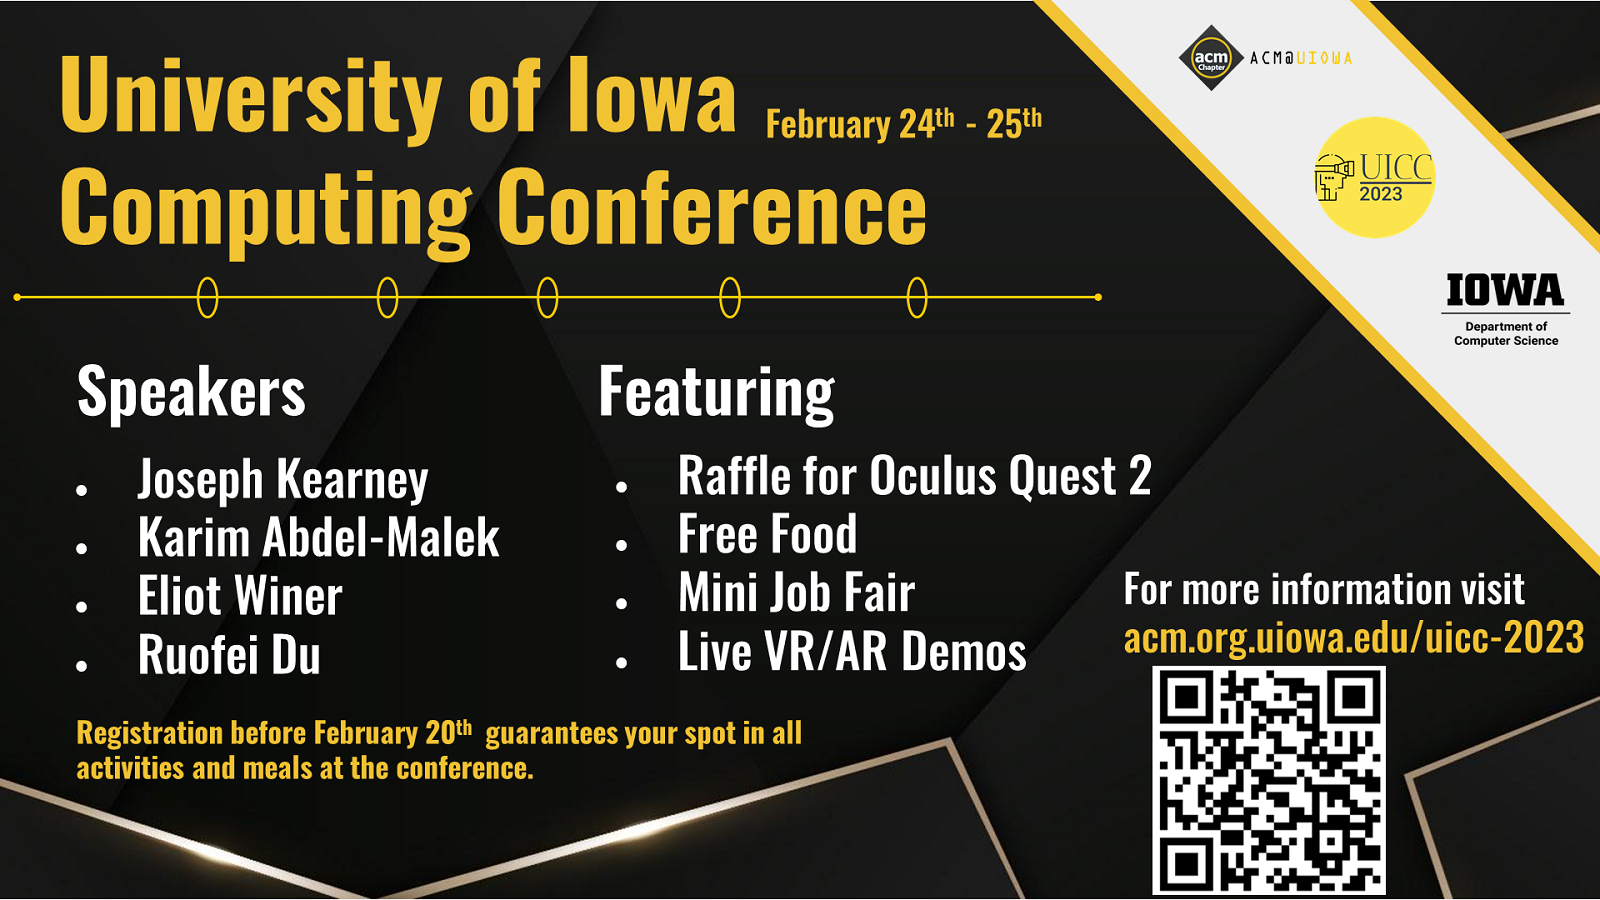 University of Iowa Computing Conference: February 24 -25, 2023 Speakers: Joseph Kearney; Karim Abdel-Malek; Eliot Winer; Ruofei Du Featuring: Raffle for Oculus Quest 2; Free Food; Mini Job Fair; Live VR/AR Demos Registration before February 20th guarantee